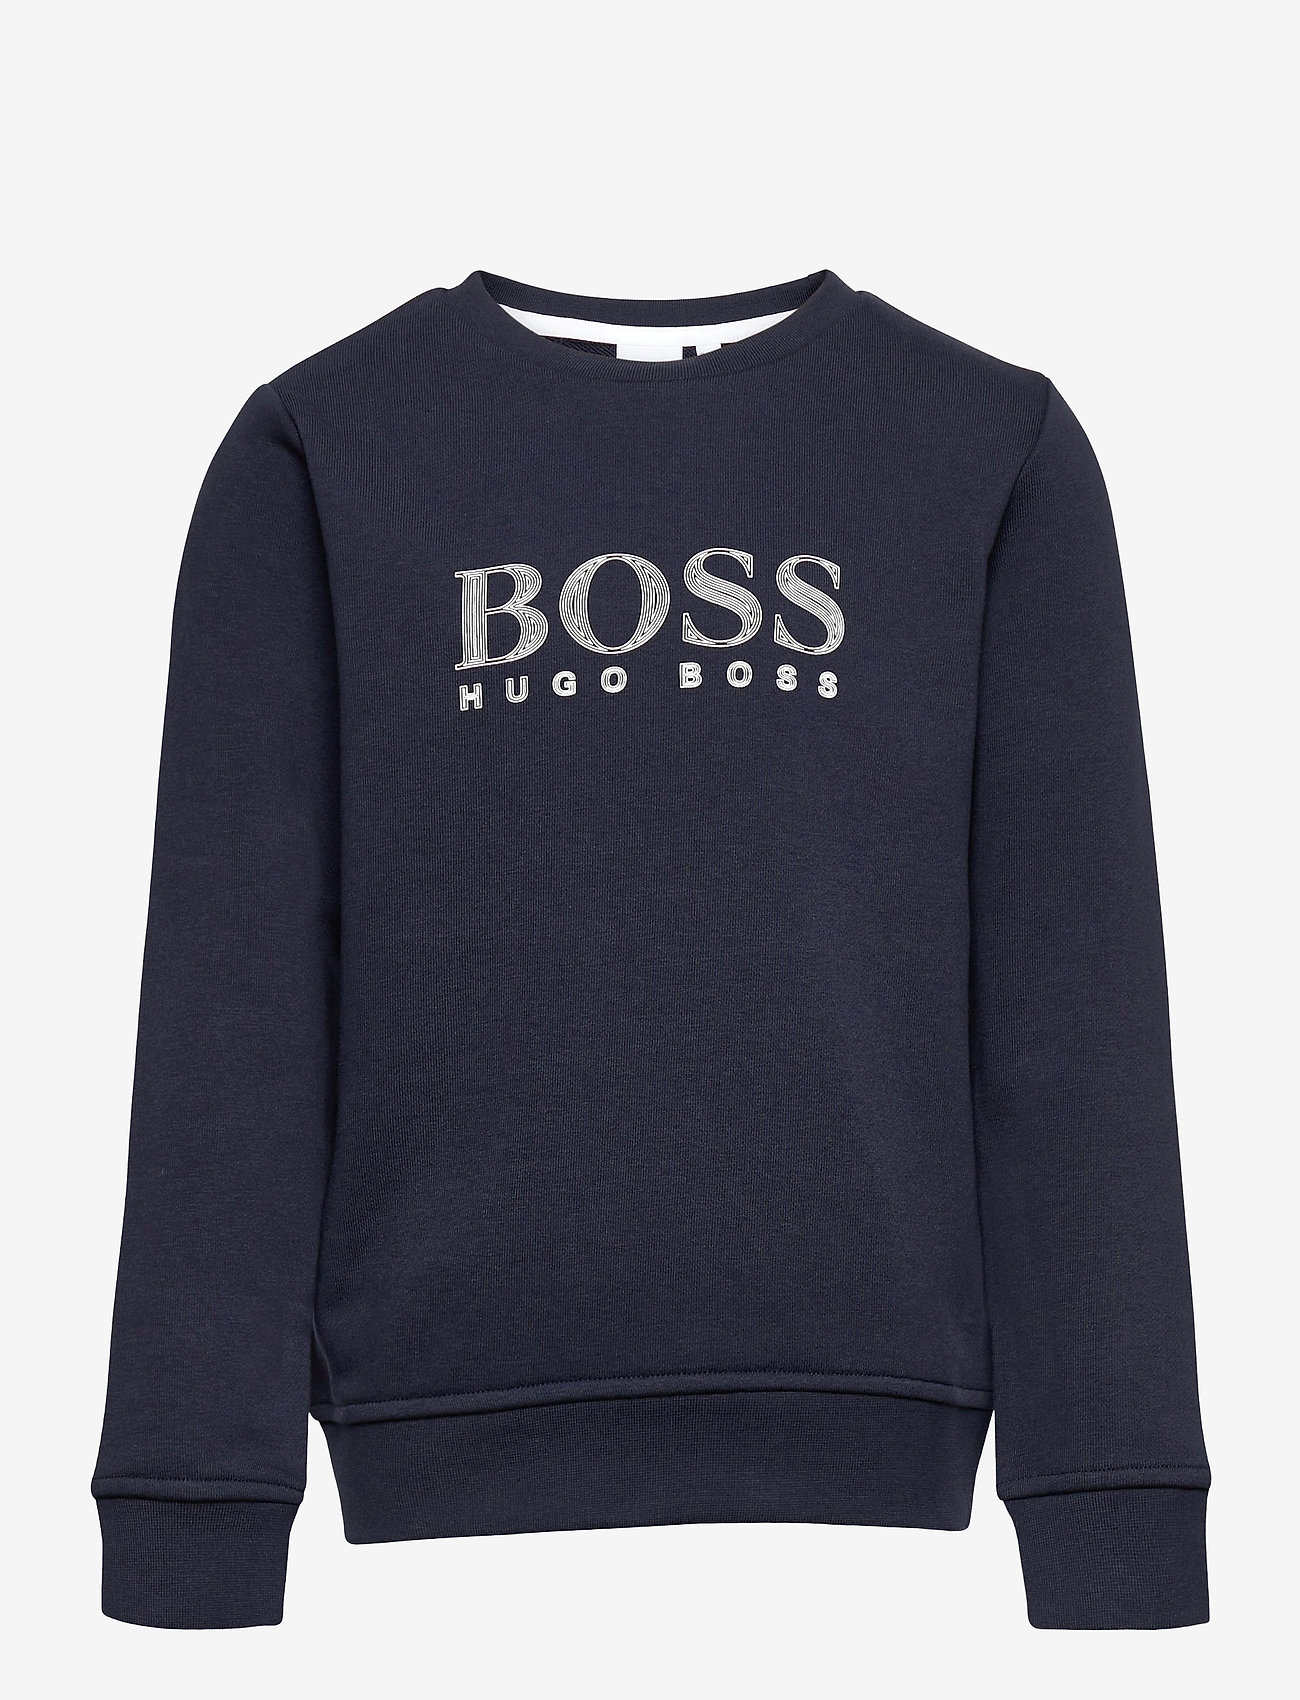 Sweatshirt (Navy) (79 €) - BOSS - | Boozt.com